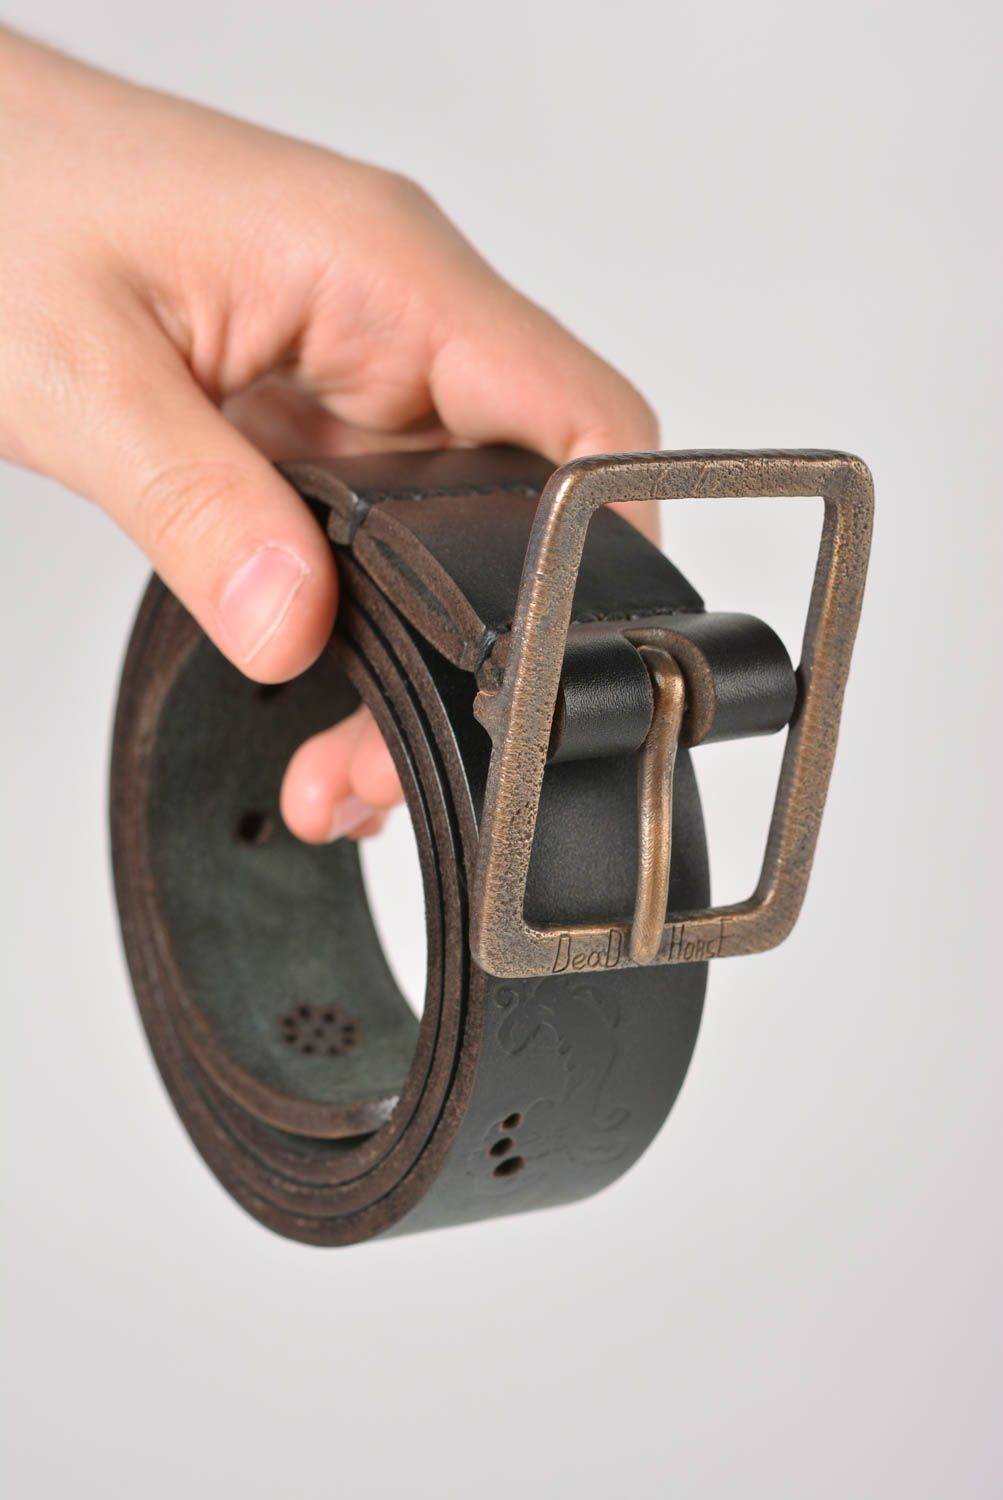 Handmade leather belt designer belts handmade leather goods men accessories photo 3